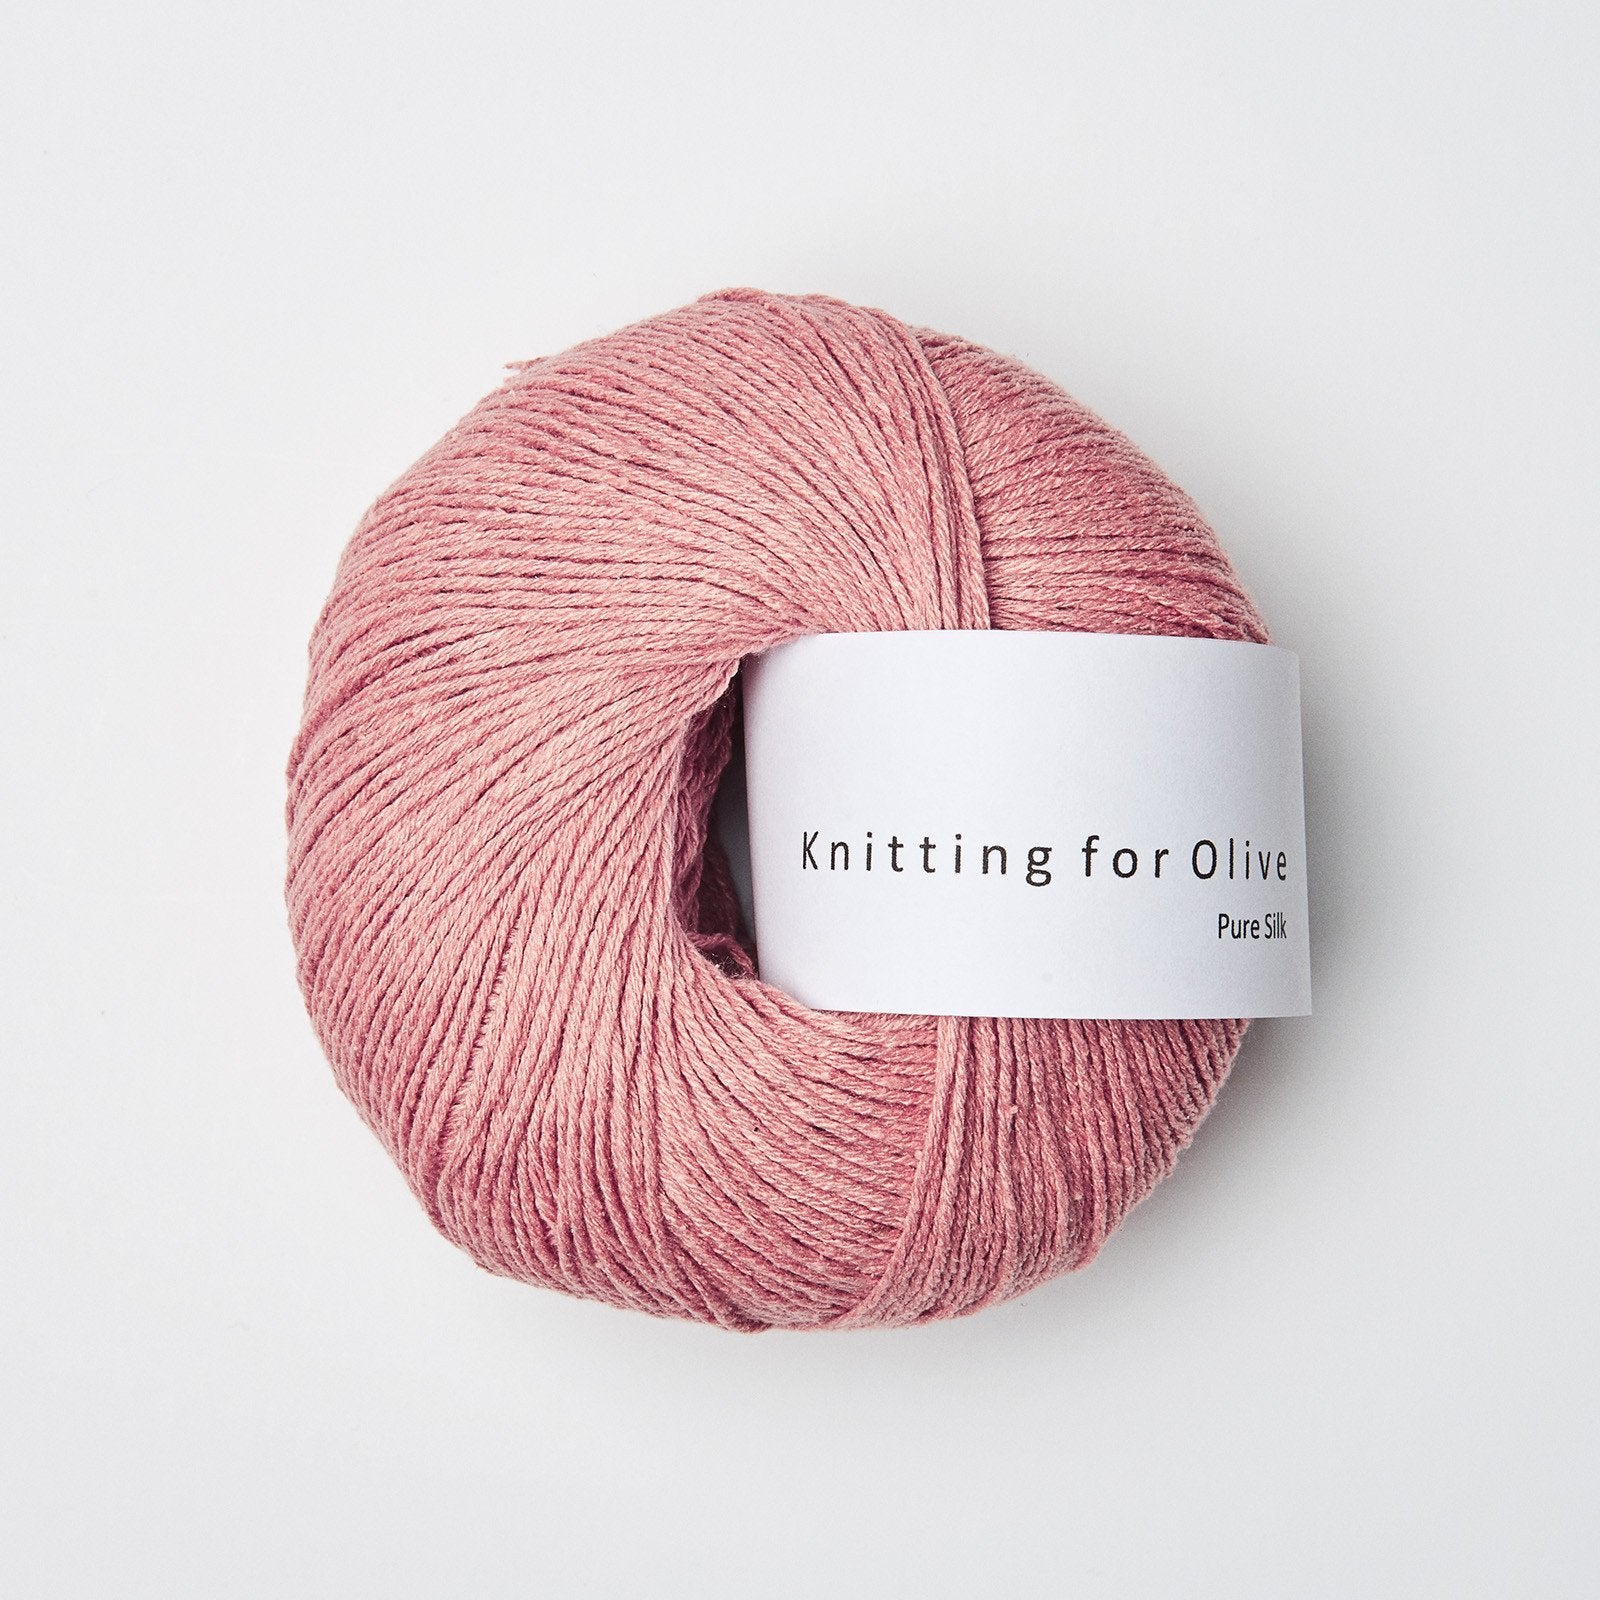 Knitting_for_olive_rabarbersaft_5243_new